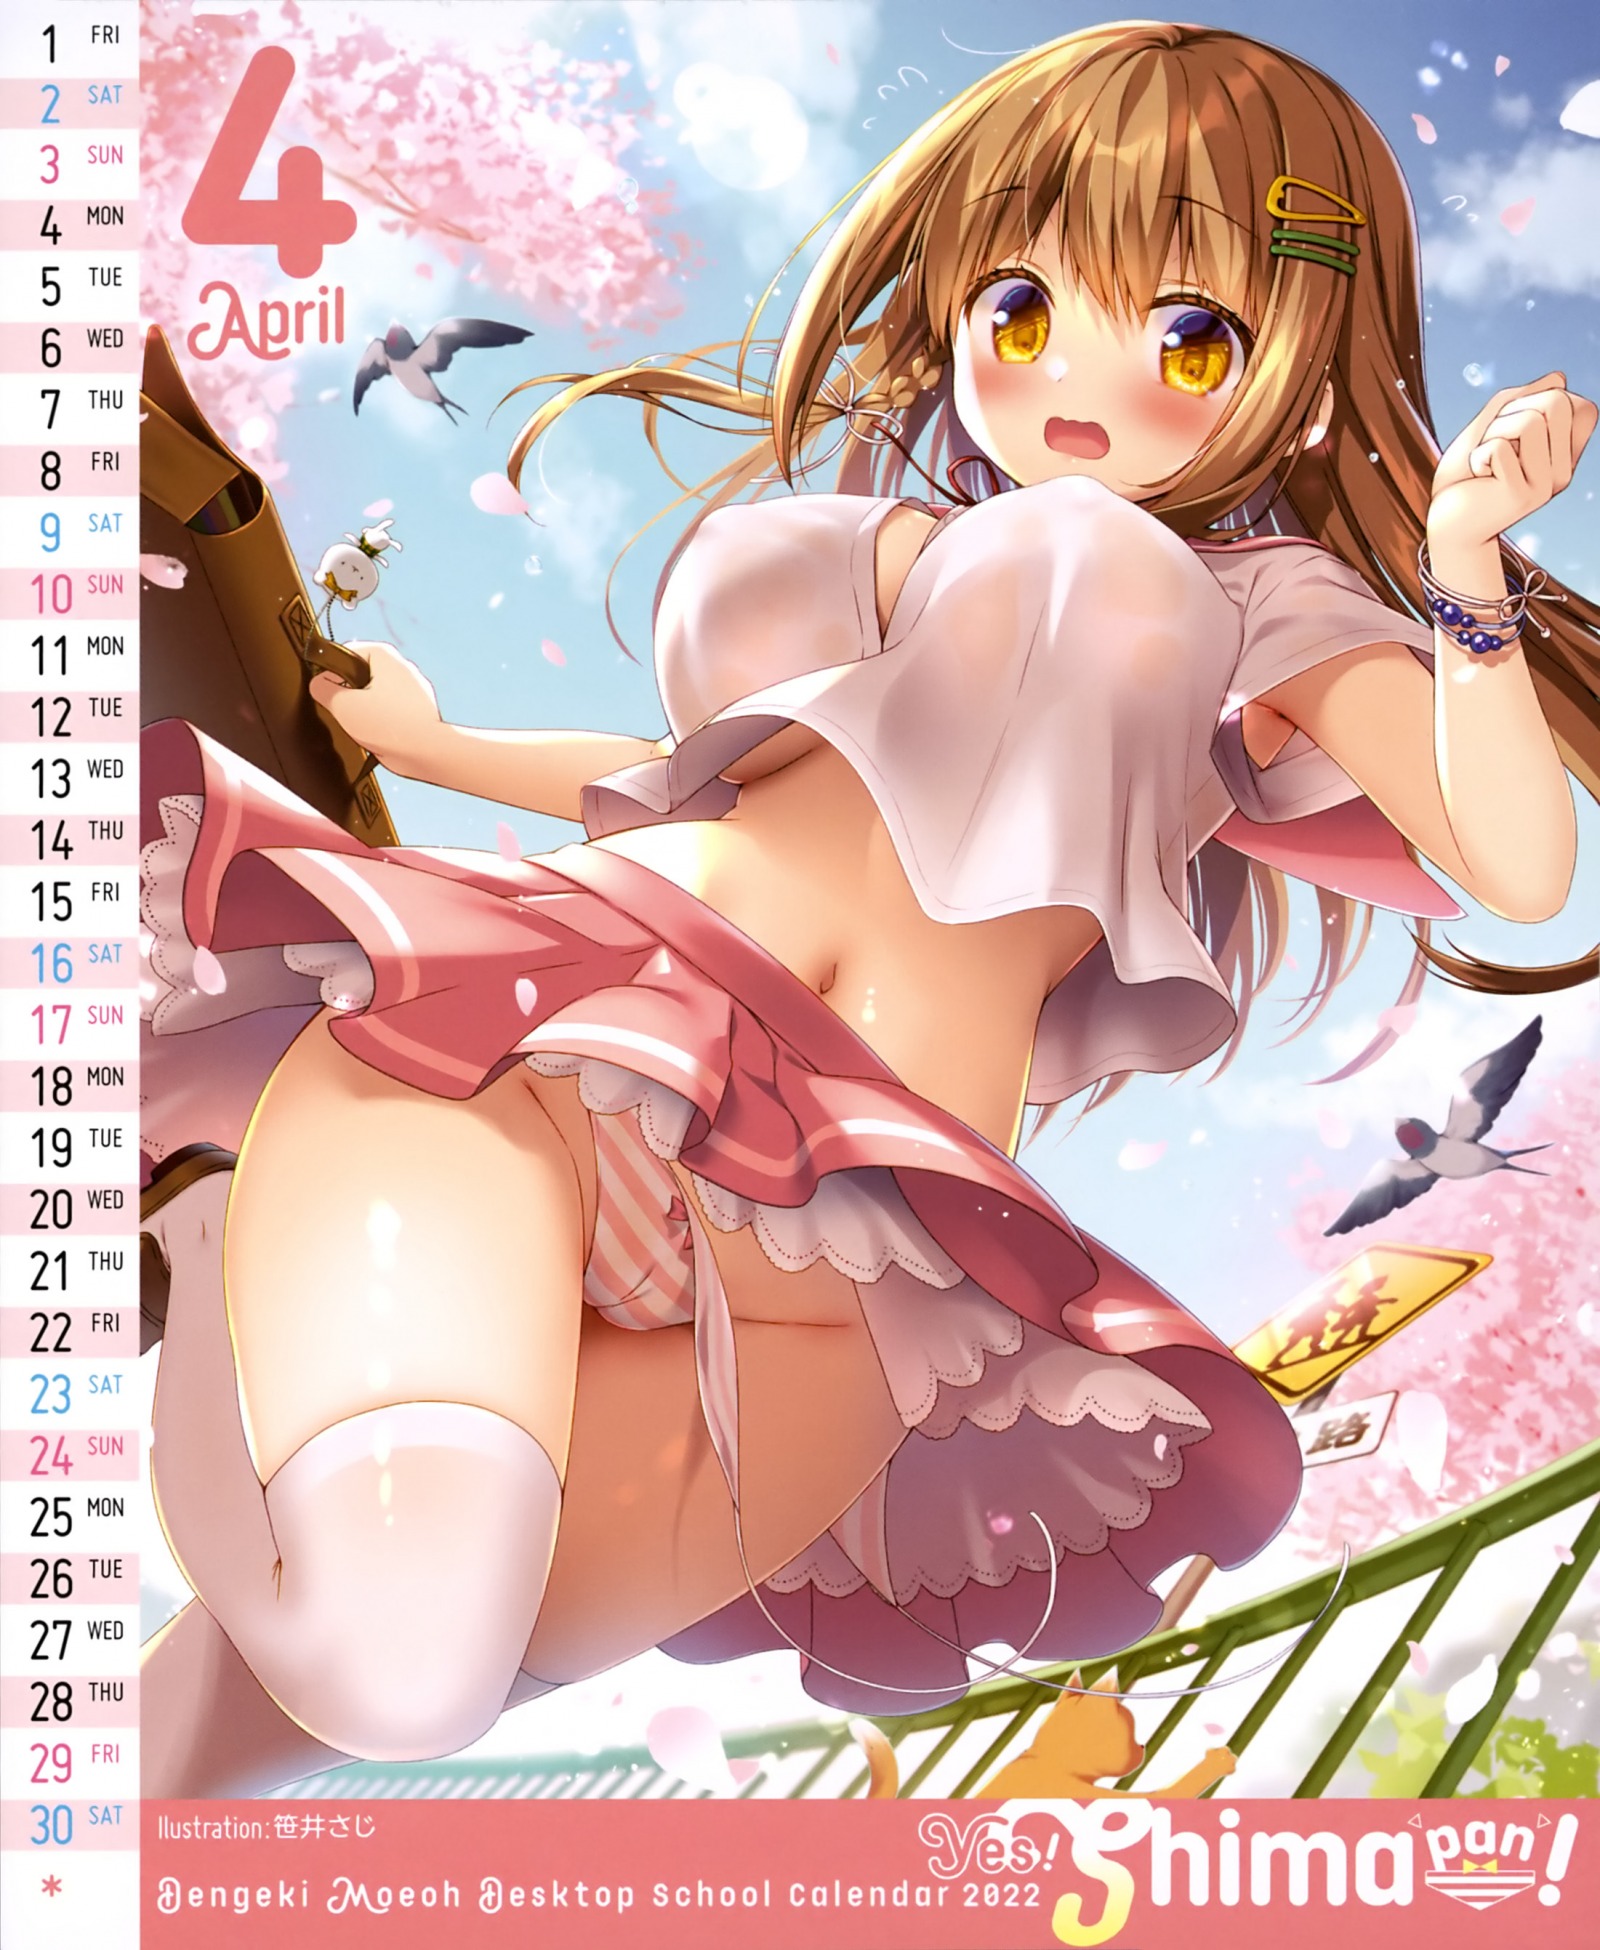  Dengeki Moeoh Desktop School Calendar 2022 Yes! Shima pan! [P5]